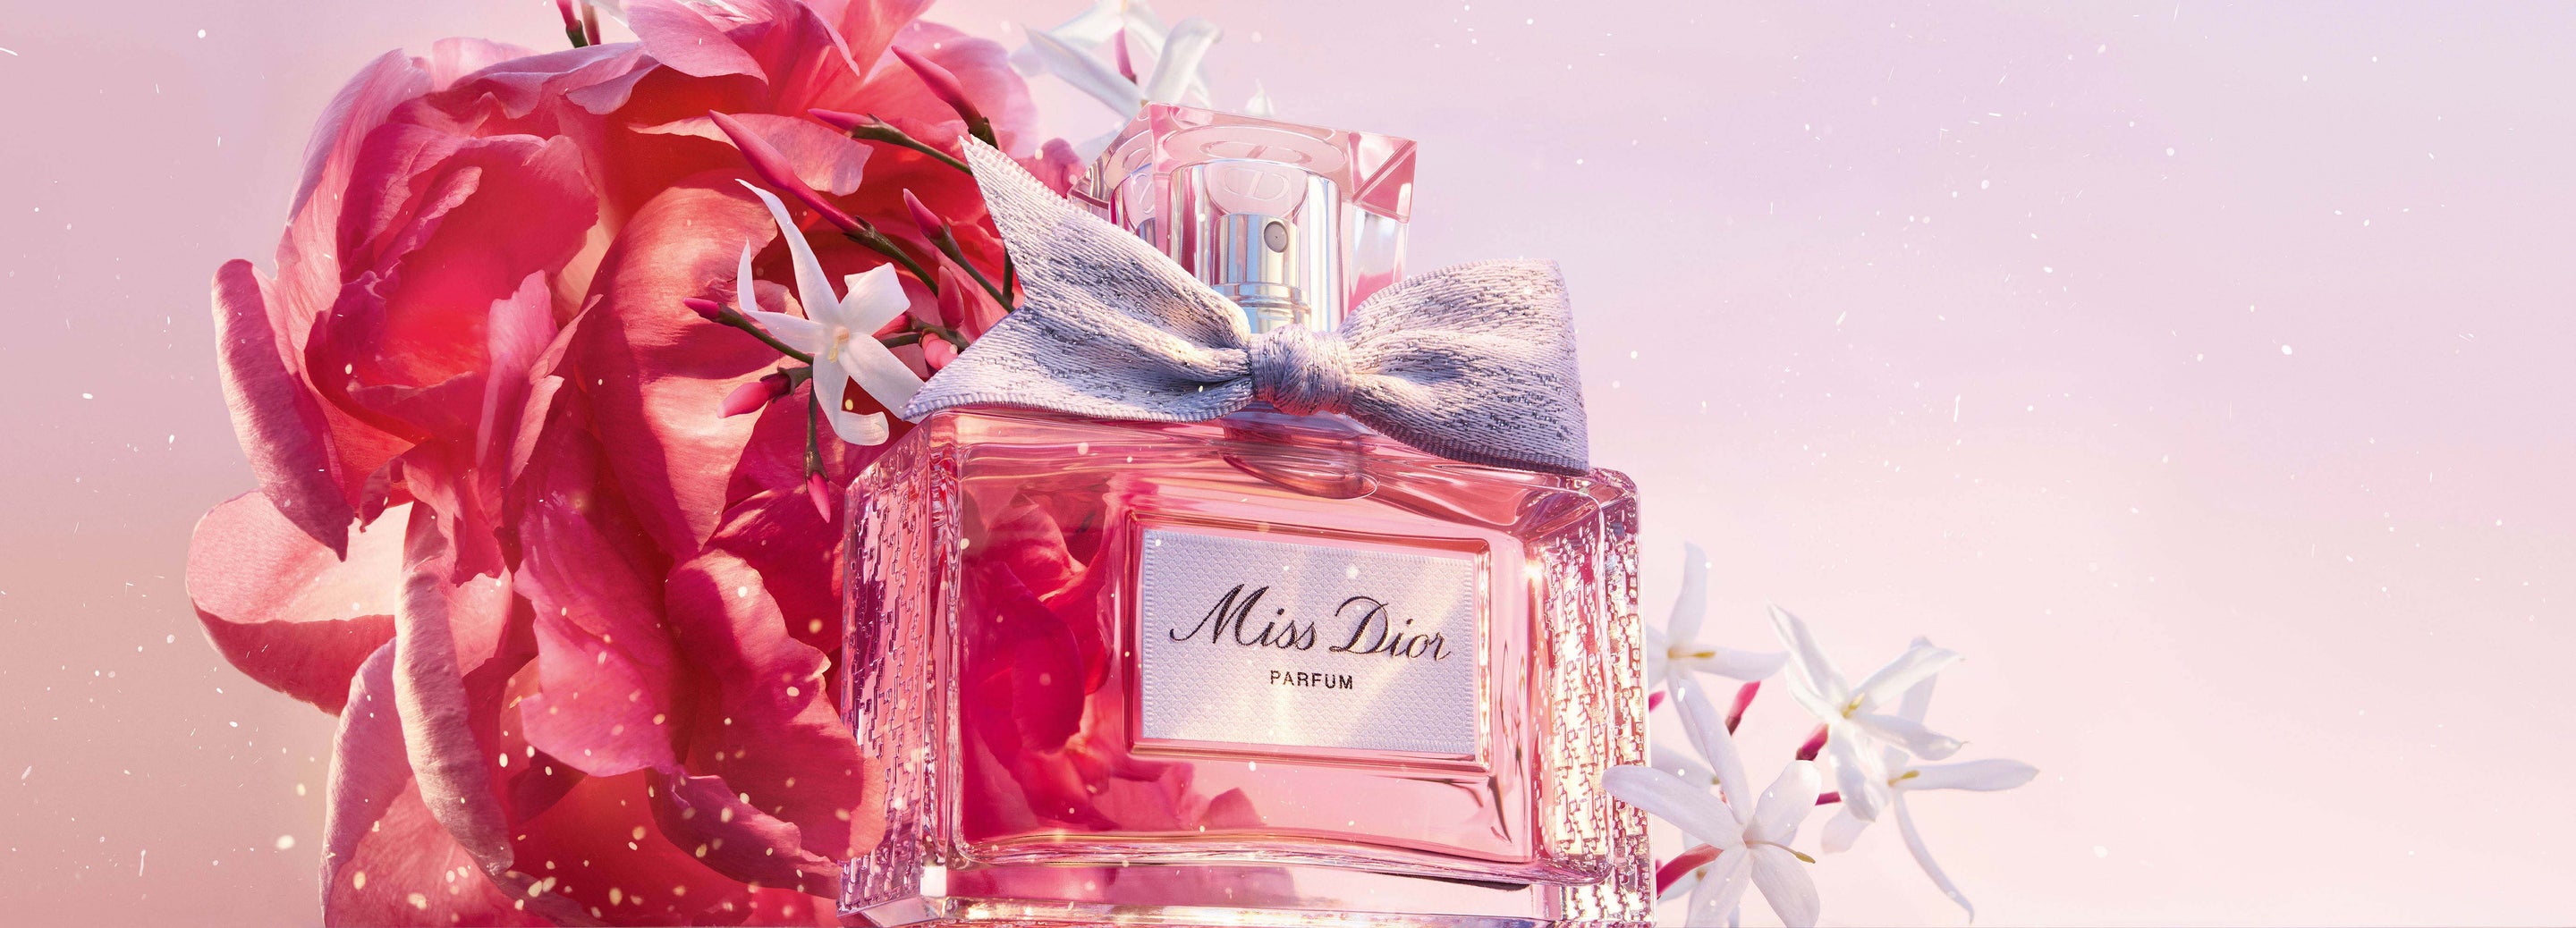 粉紅色花卉背景下的Miss Dior香精